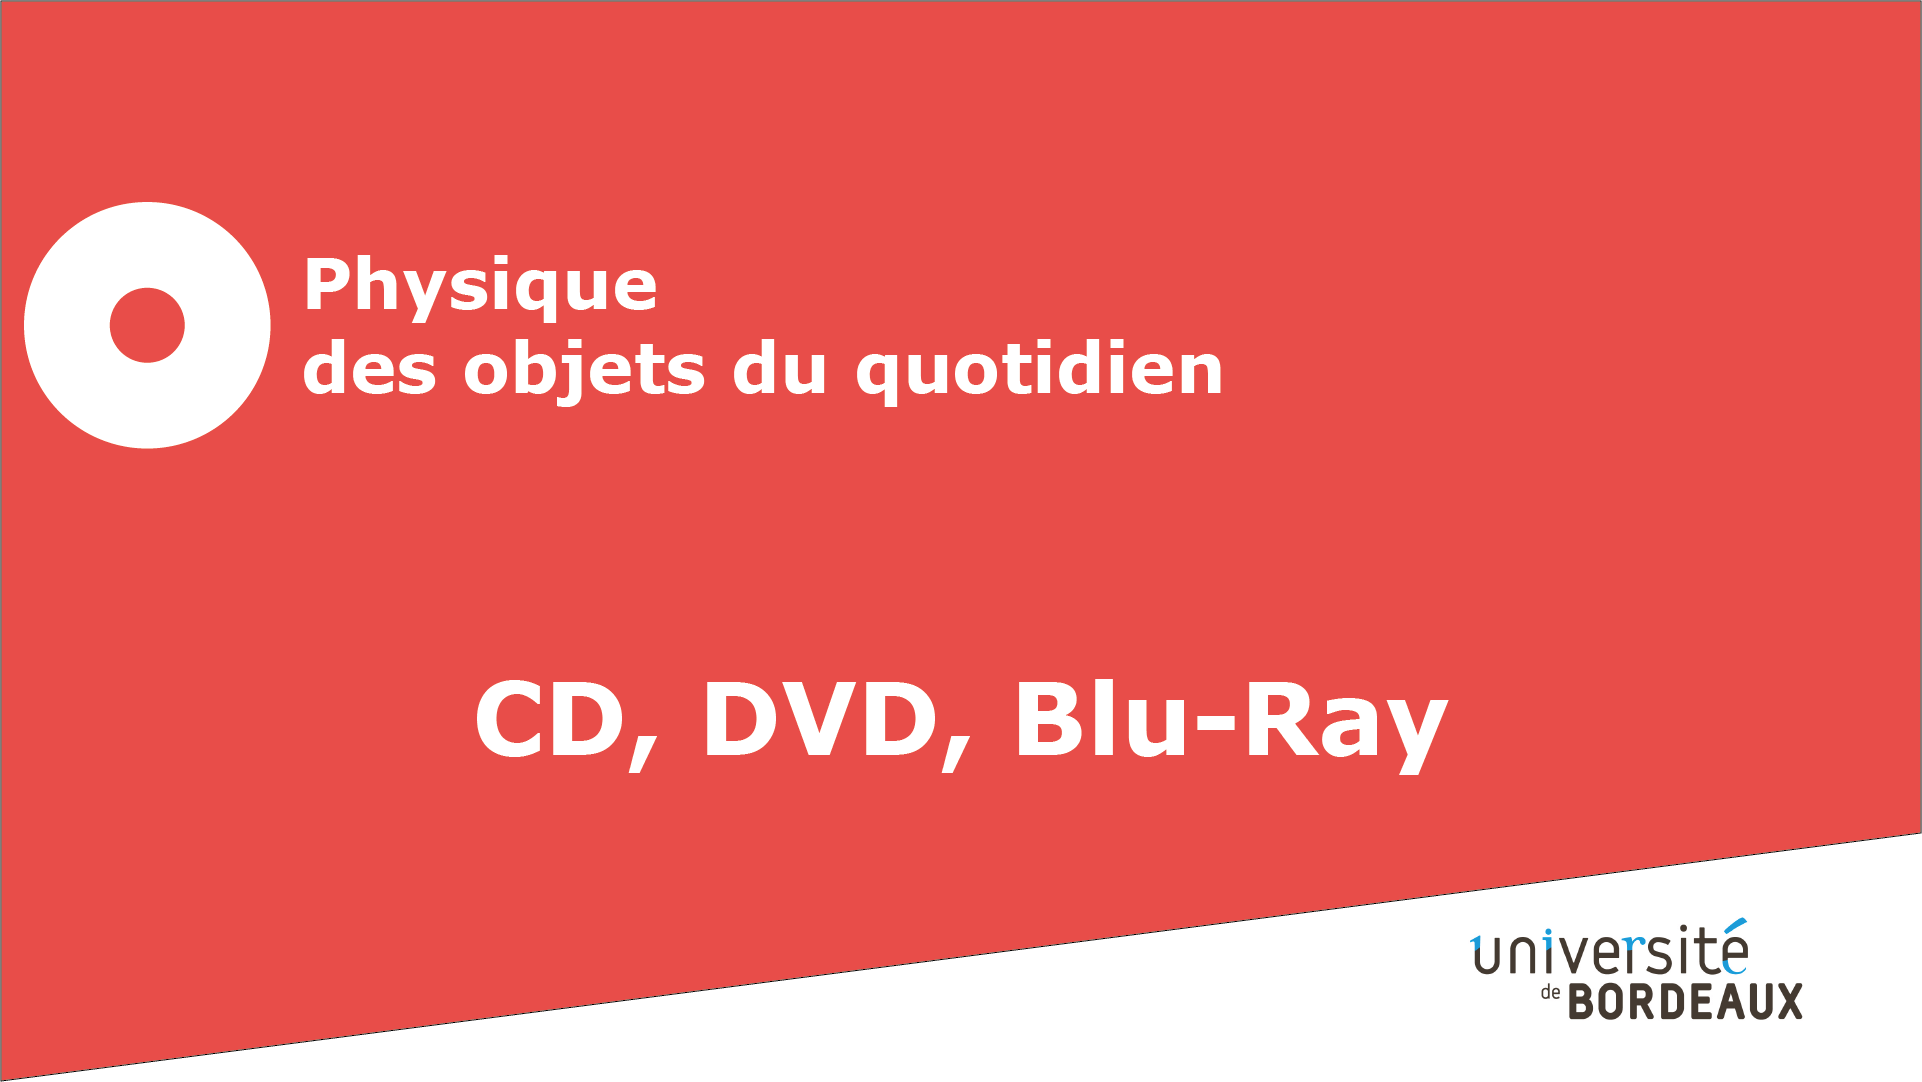 17 - CD, DVD, Blu-ray / Le codage binaire (complément)